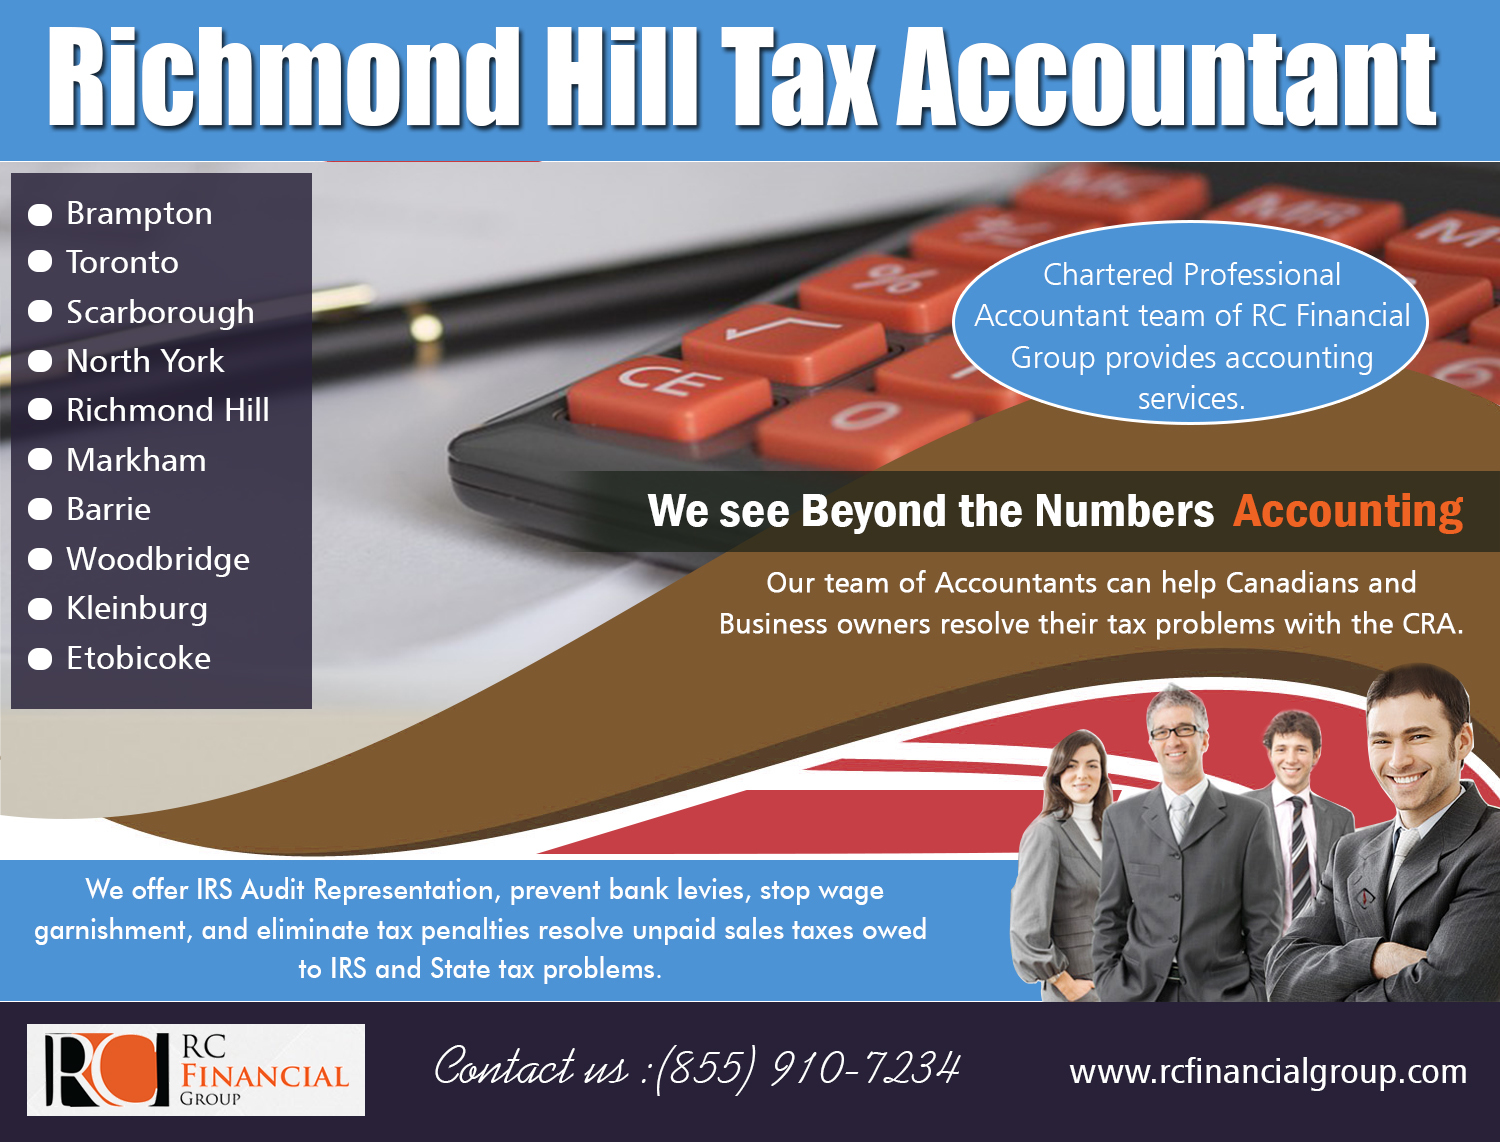 Scarborough Tax Accountant